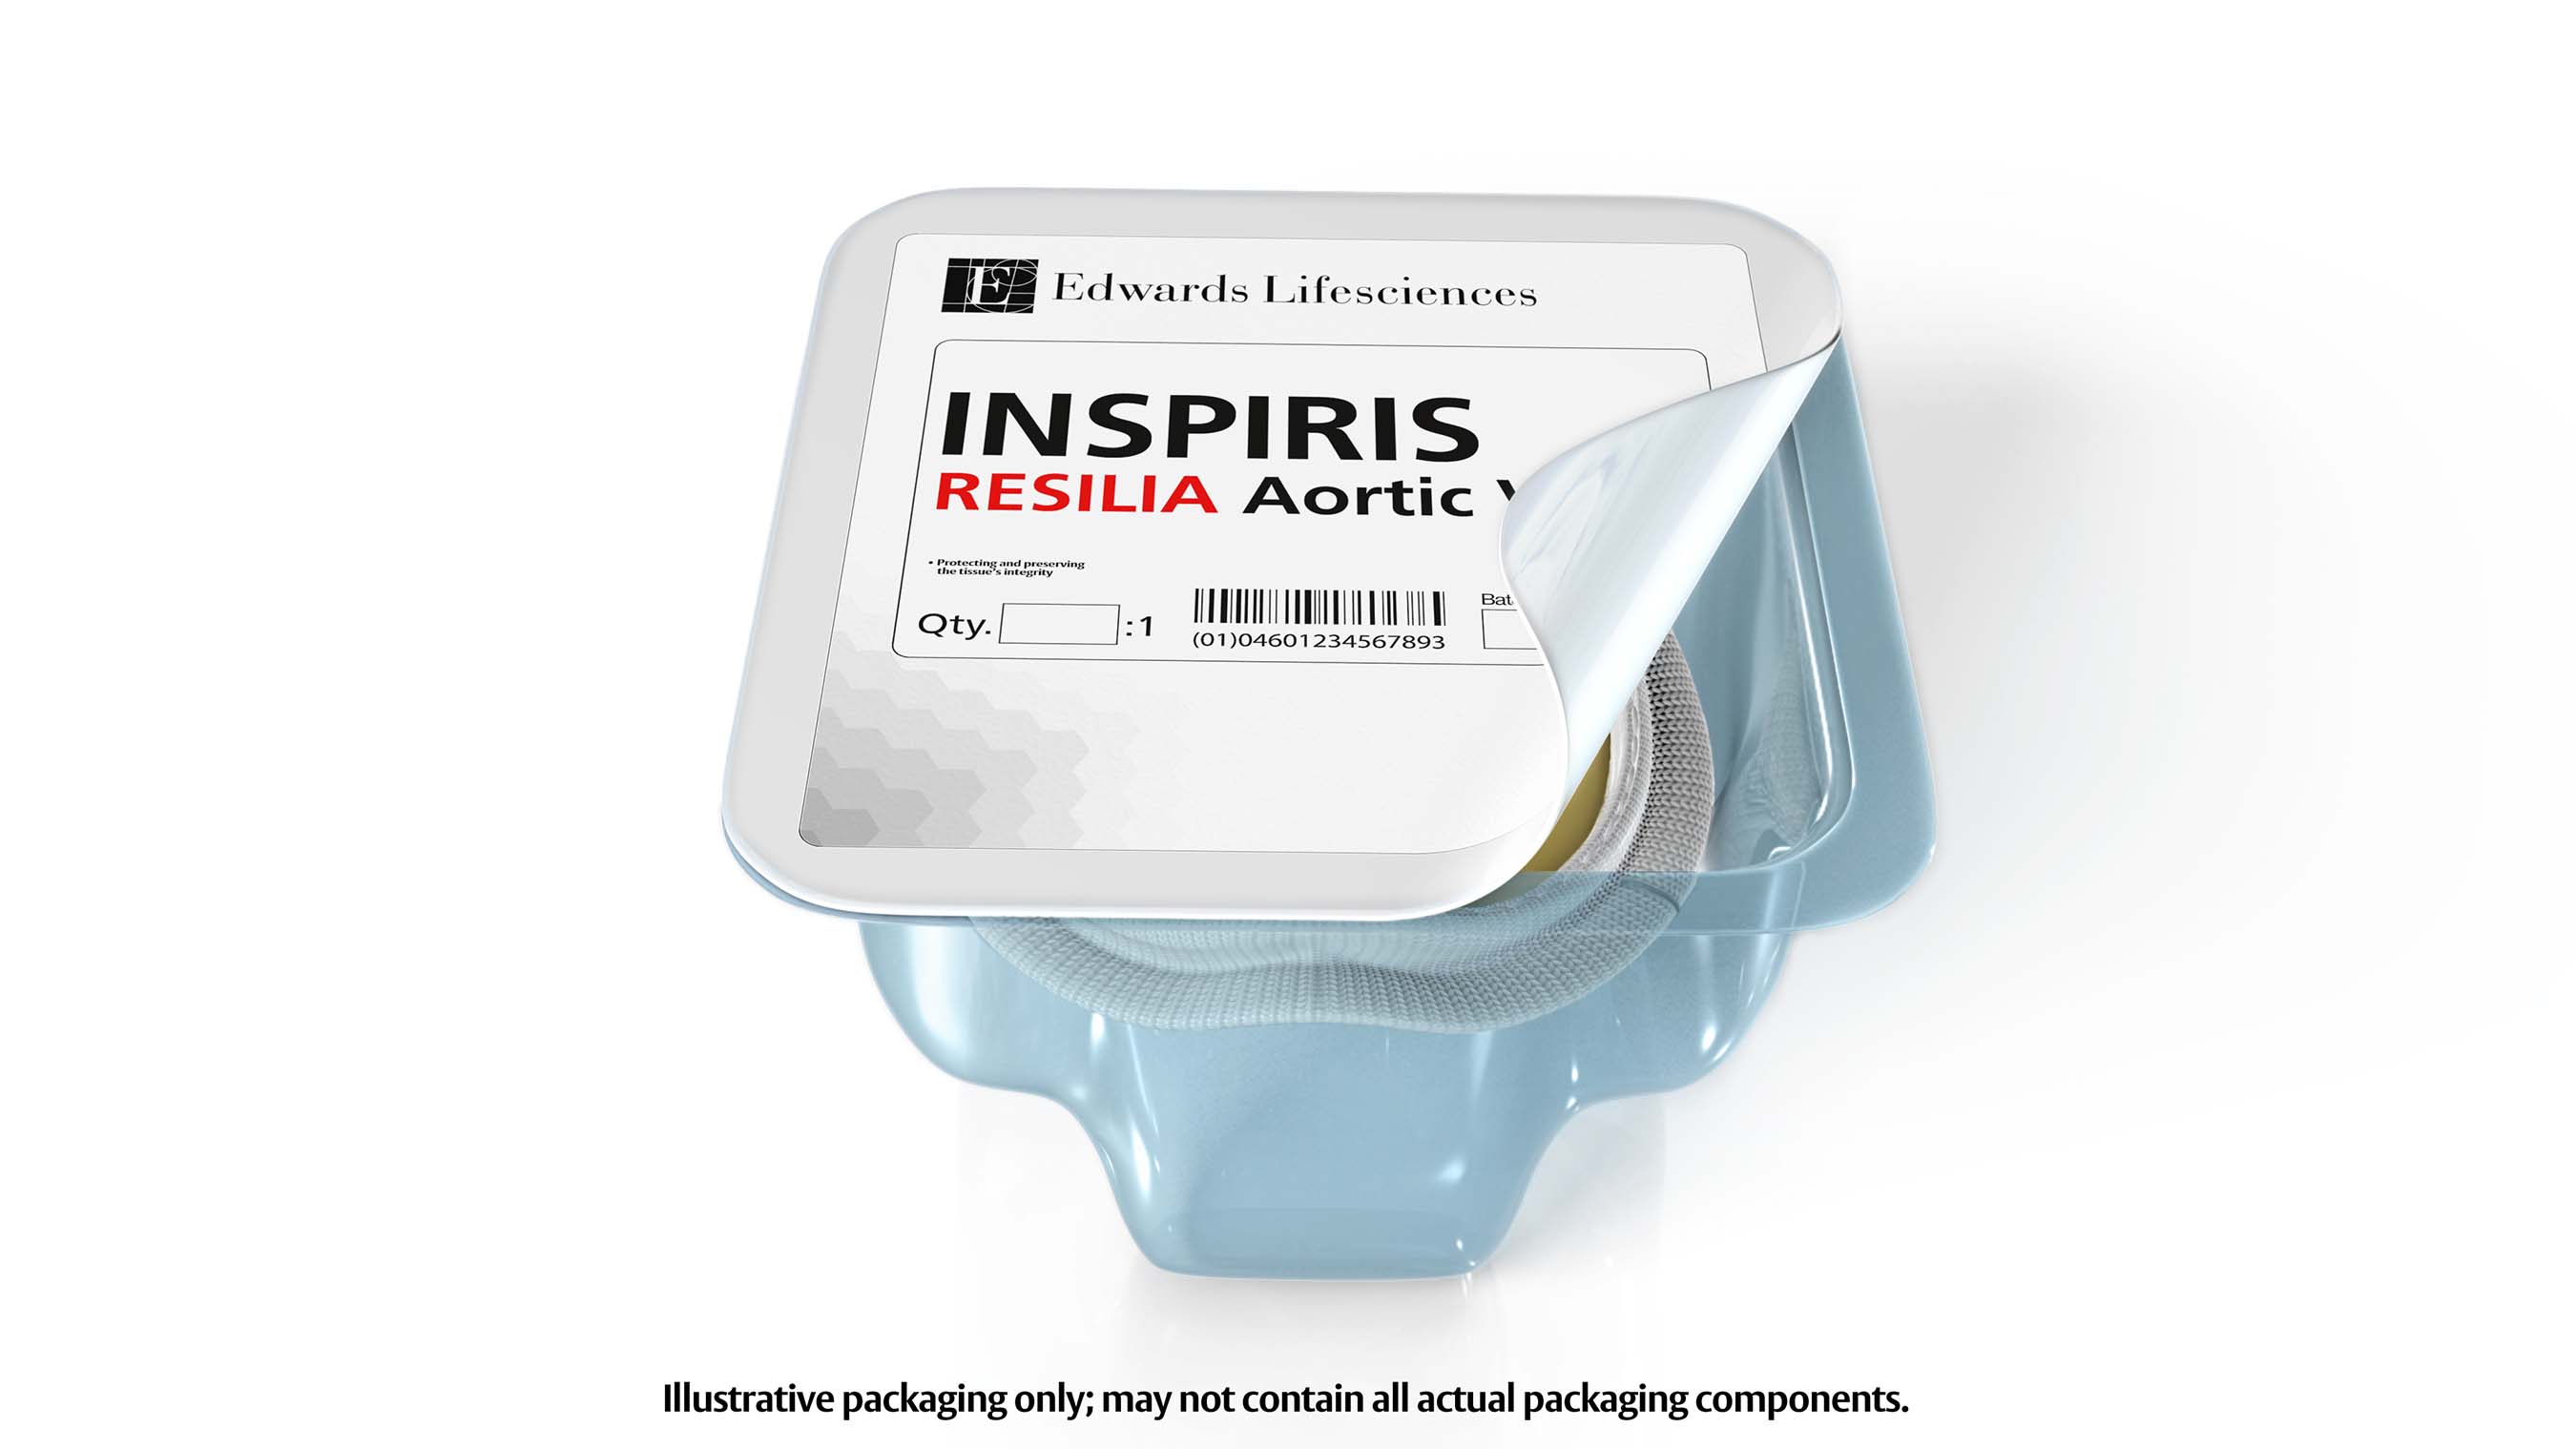 INSPIRIS valve illustrative packaging (dry storage)